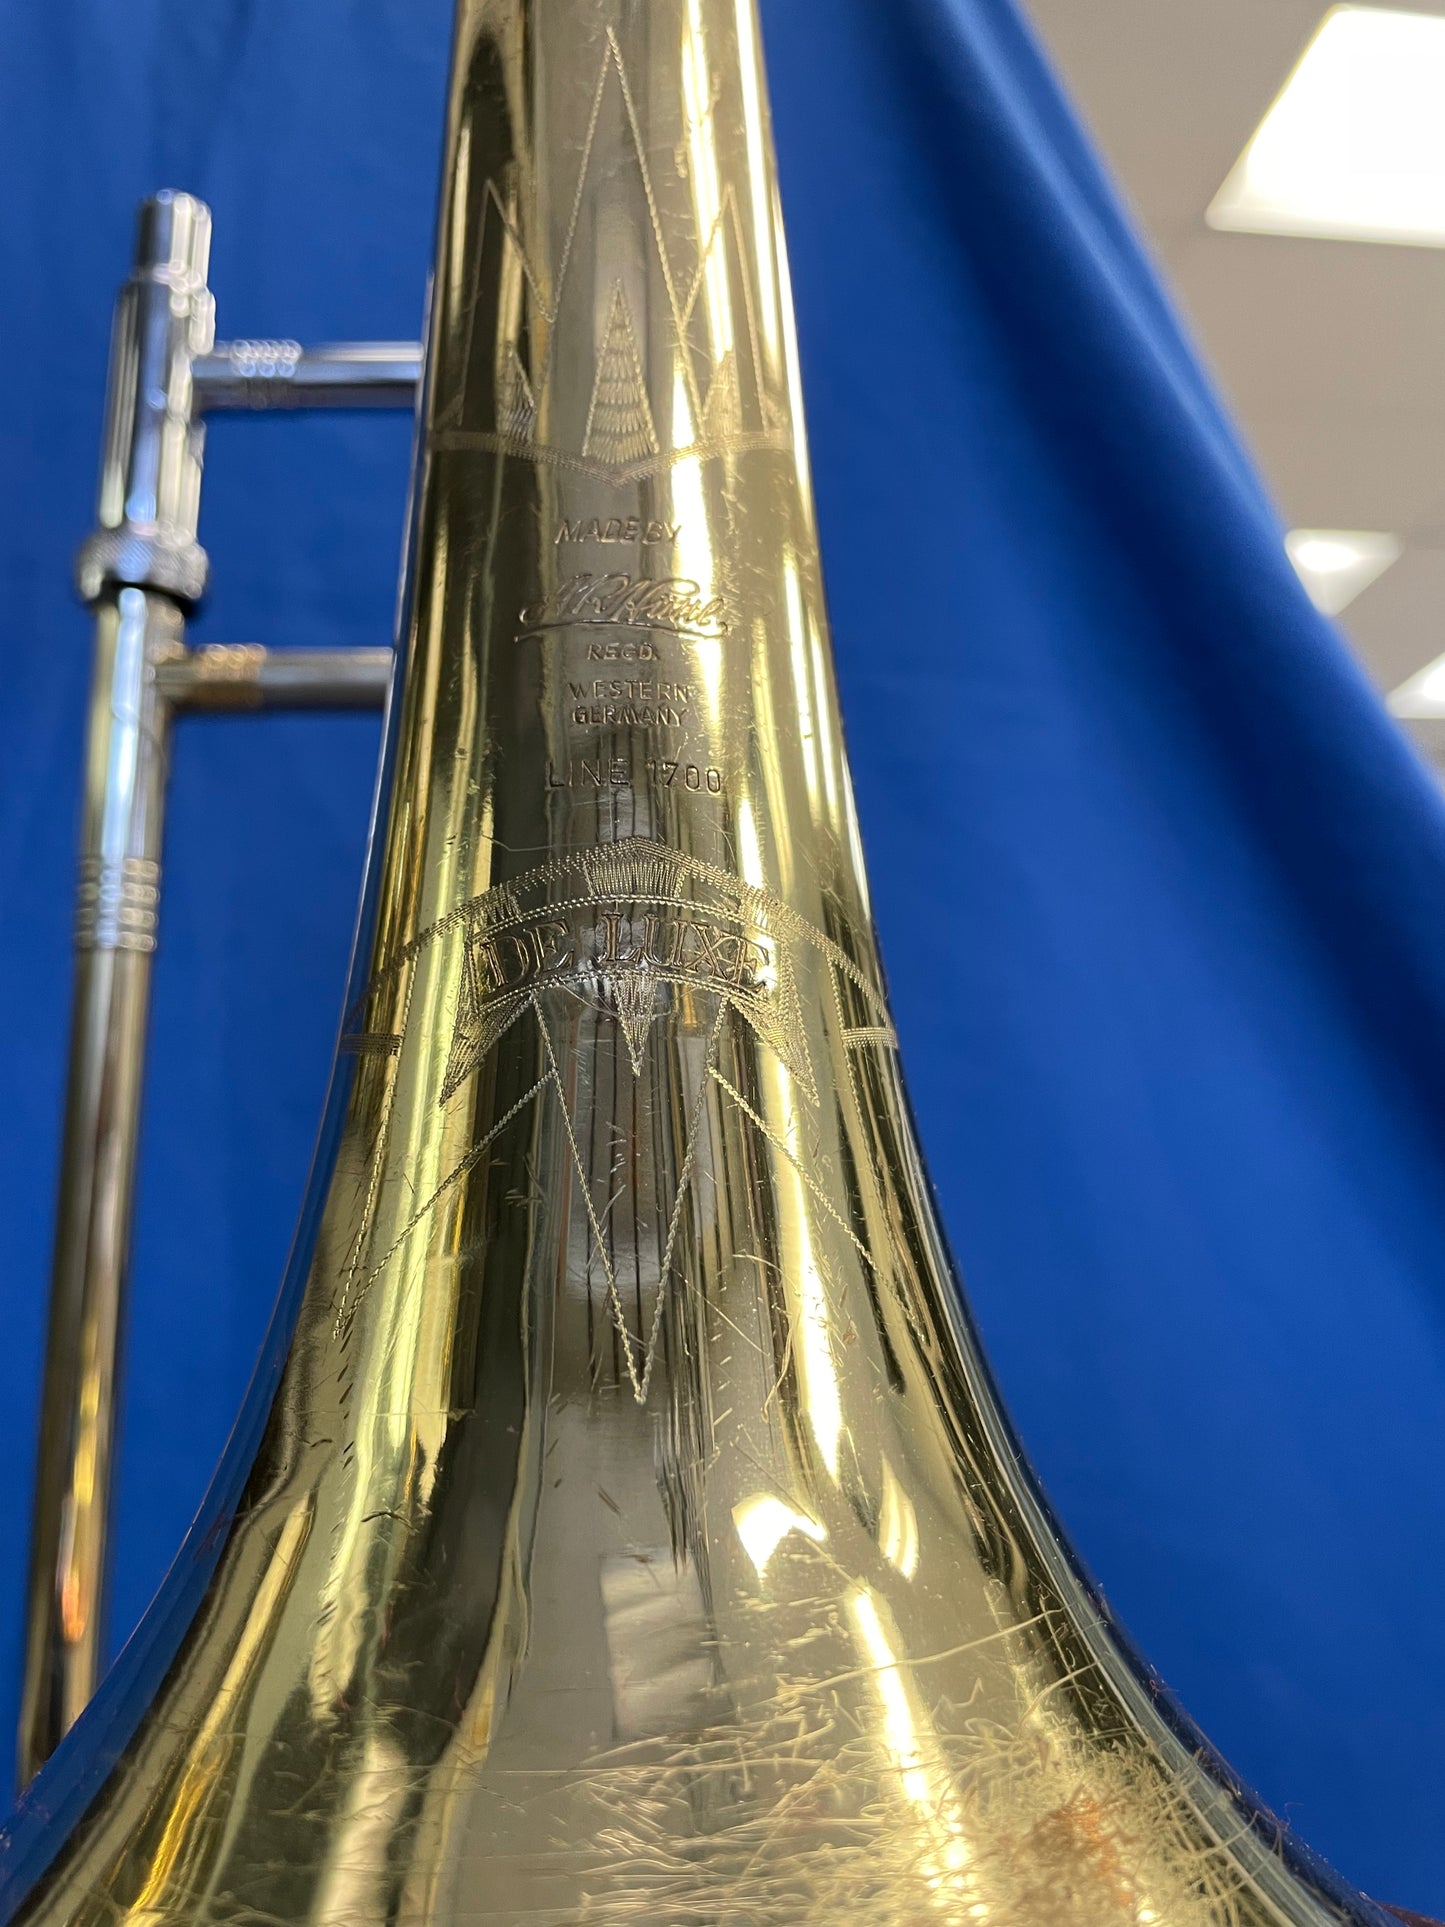 Pre-Owned Huttl Trombone